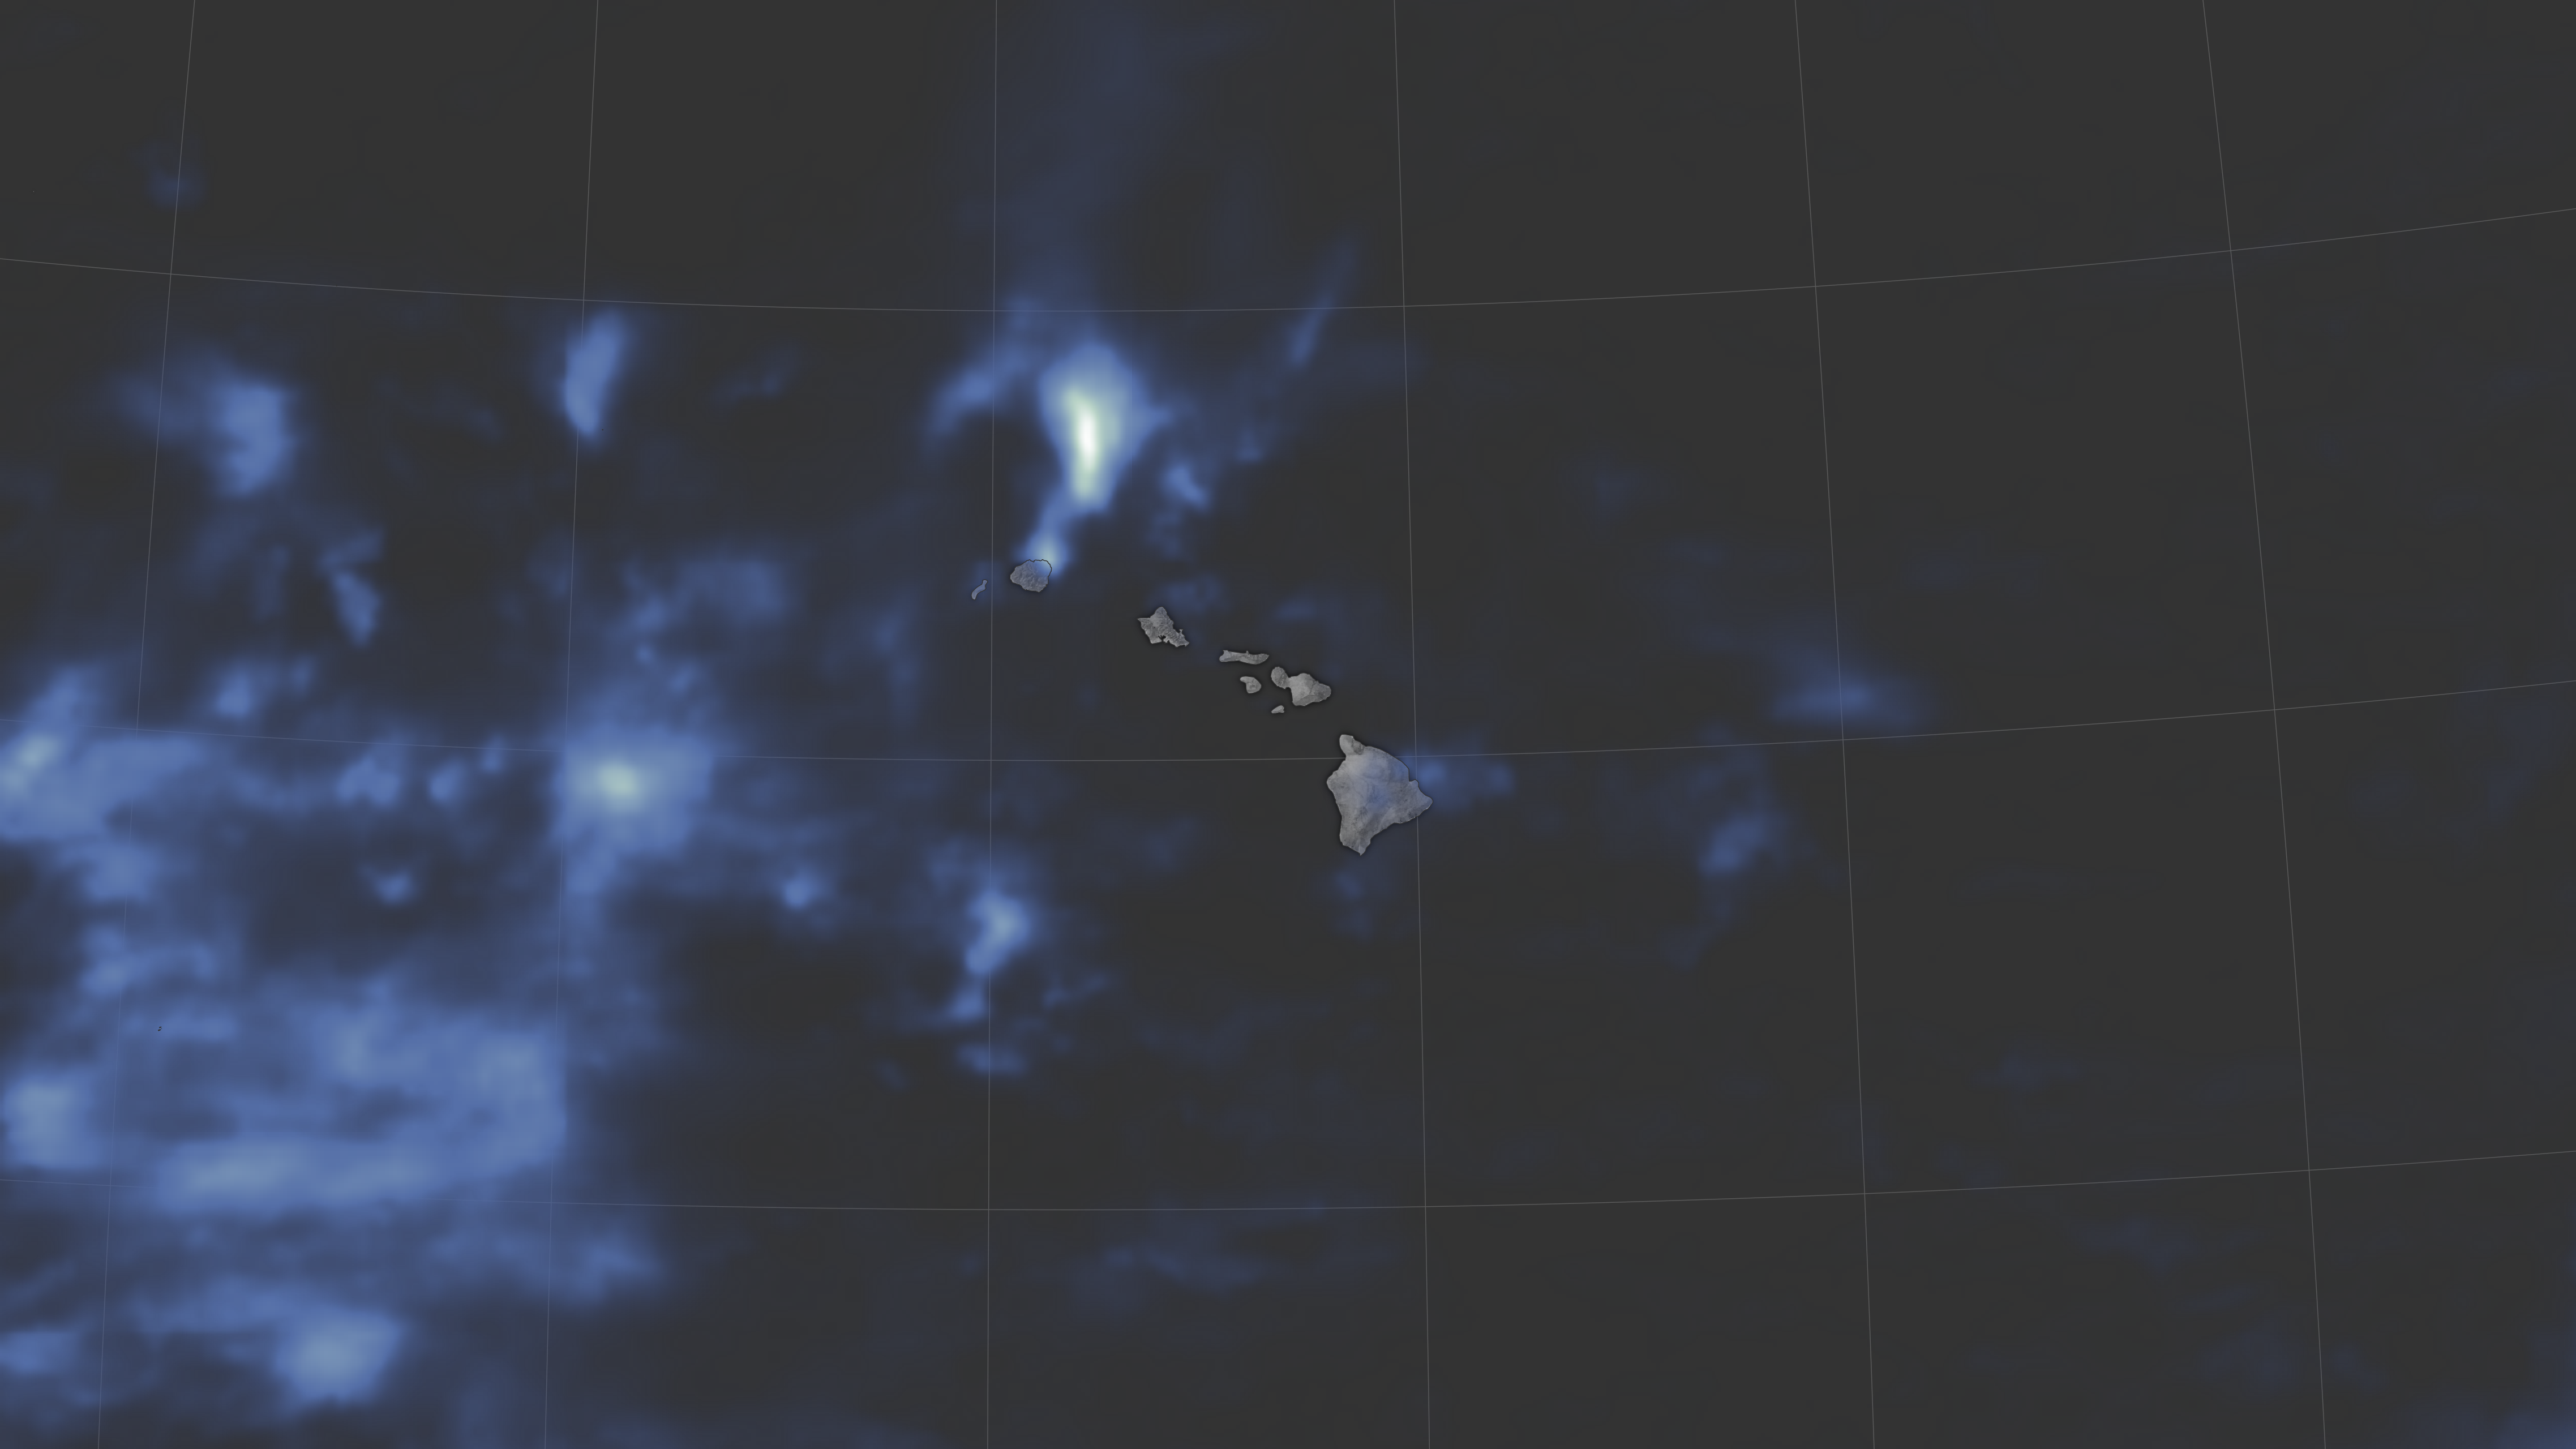 Rain Drenches Kauai - related image preview